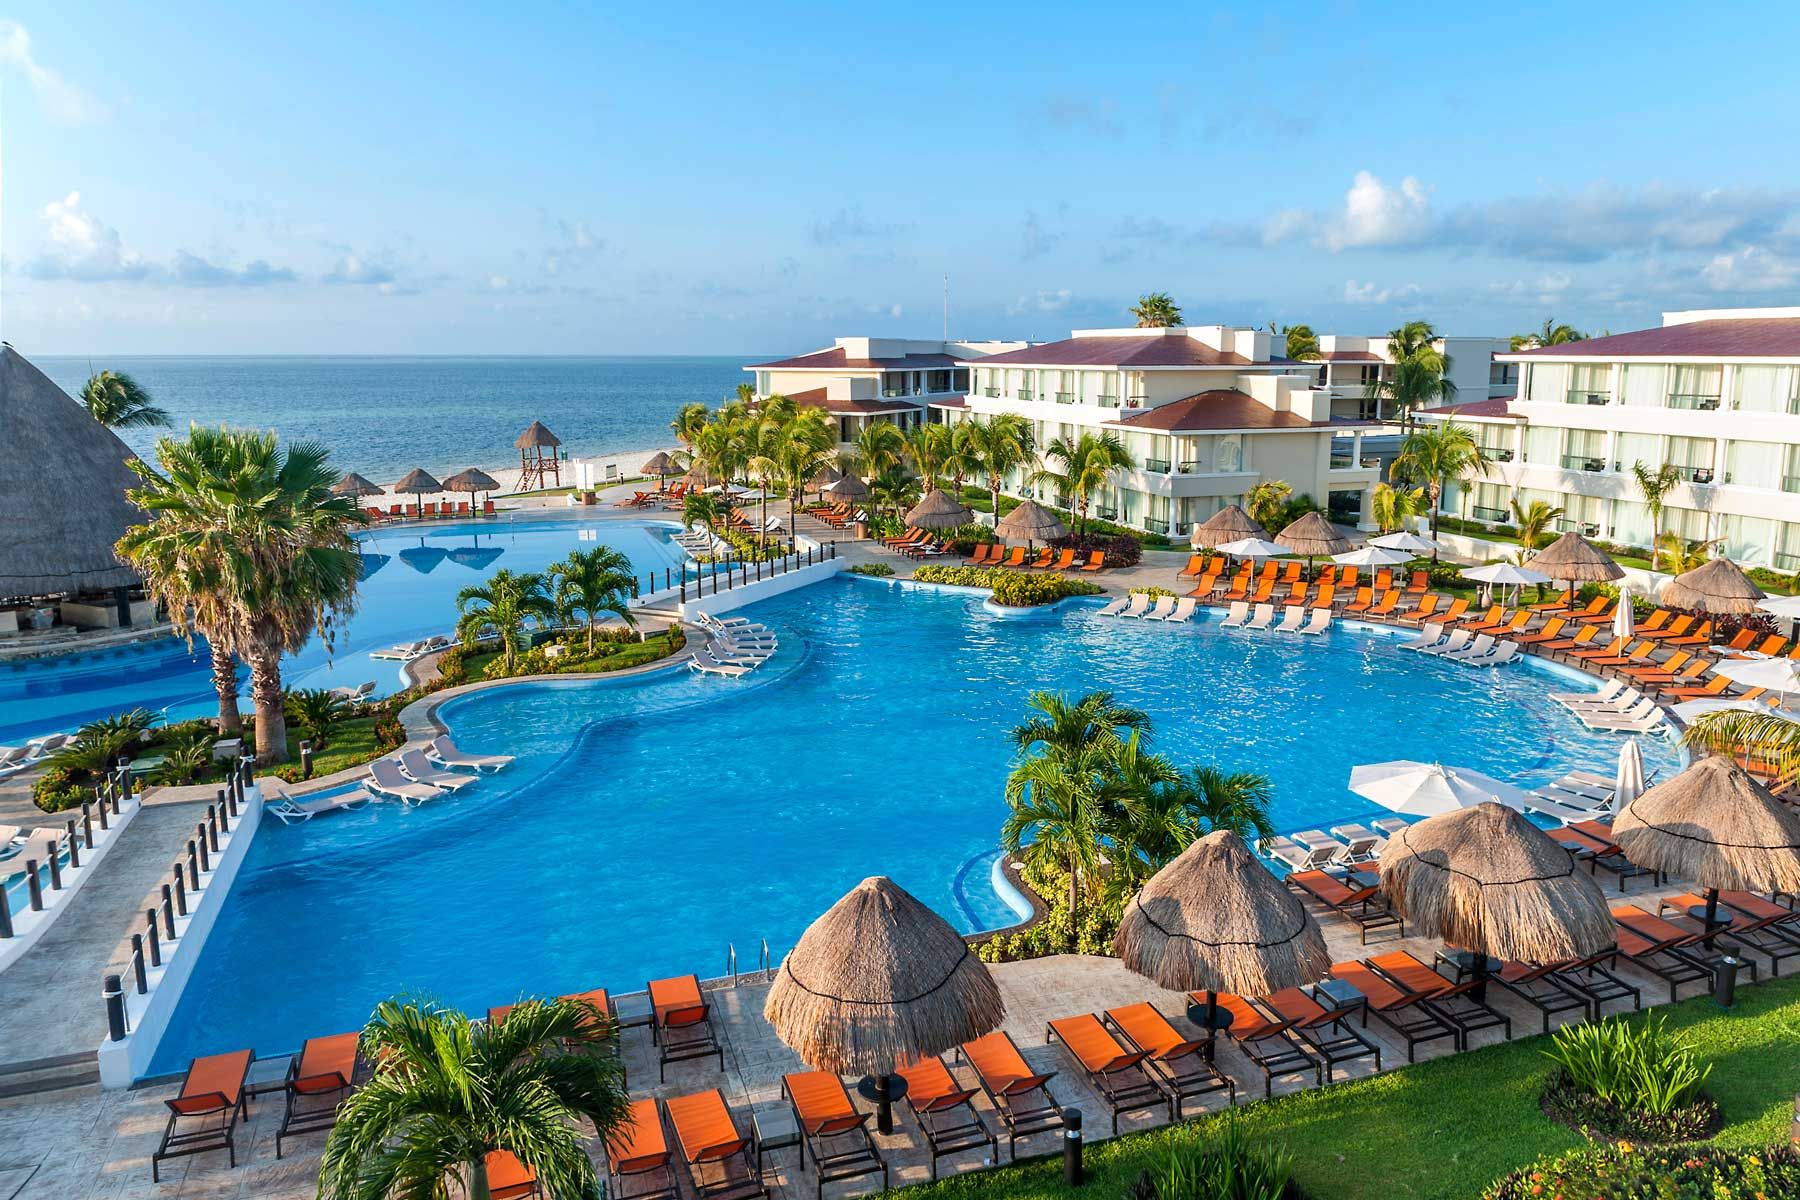 Luna Palace Cancun